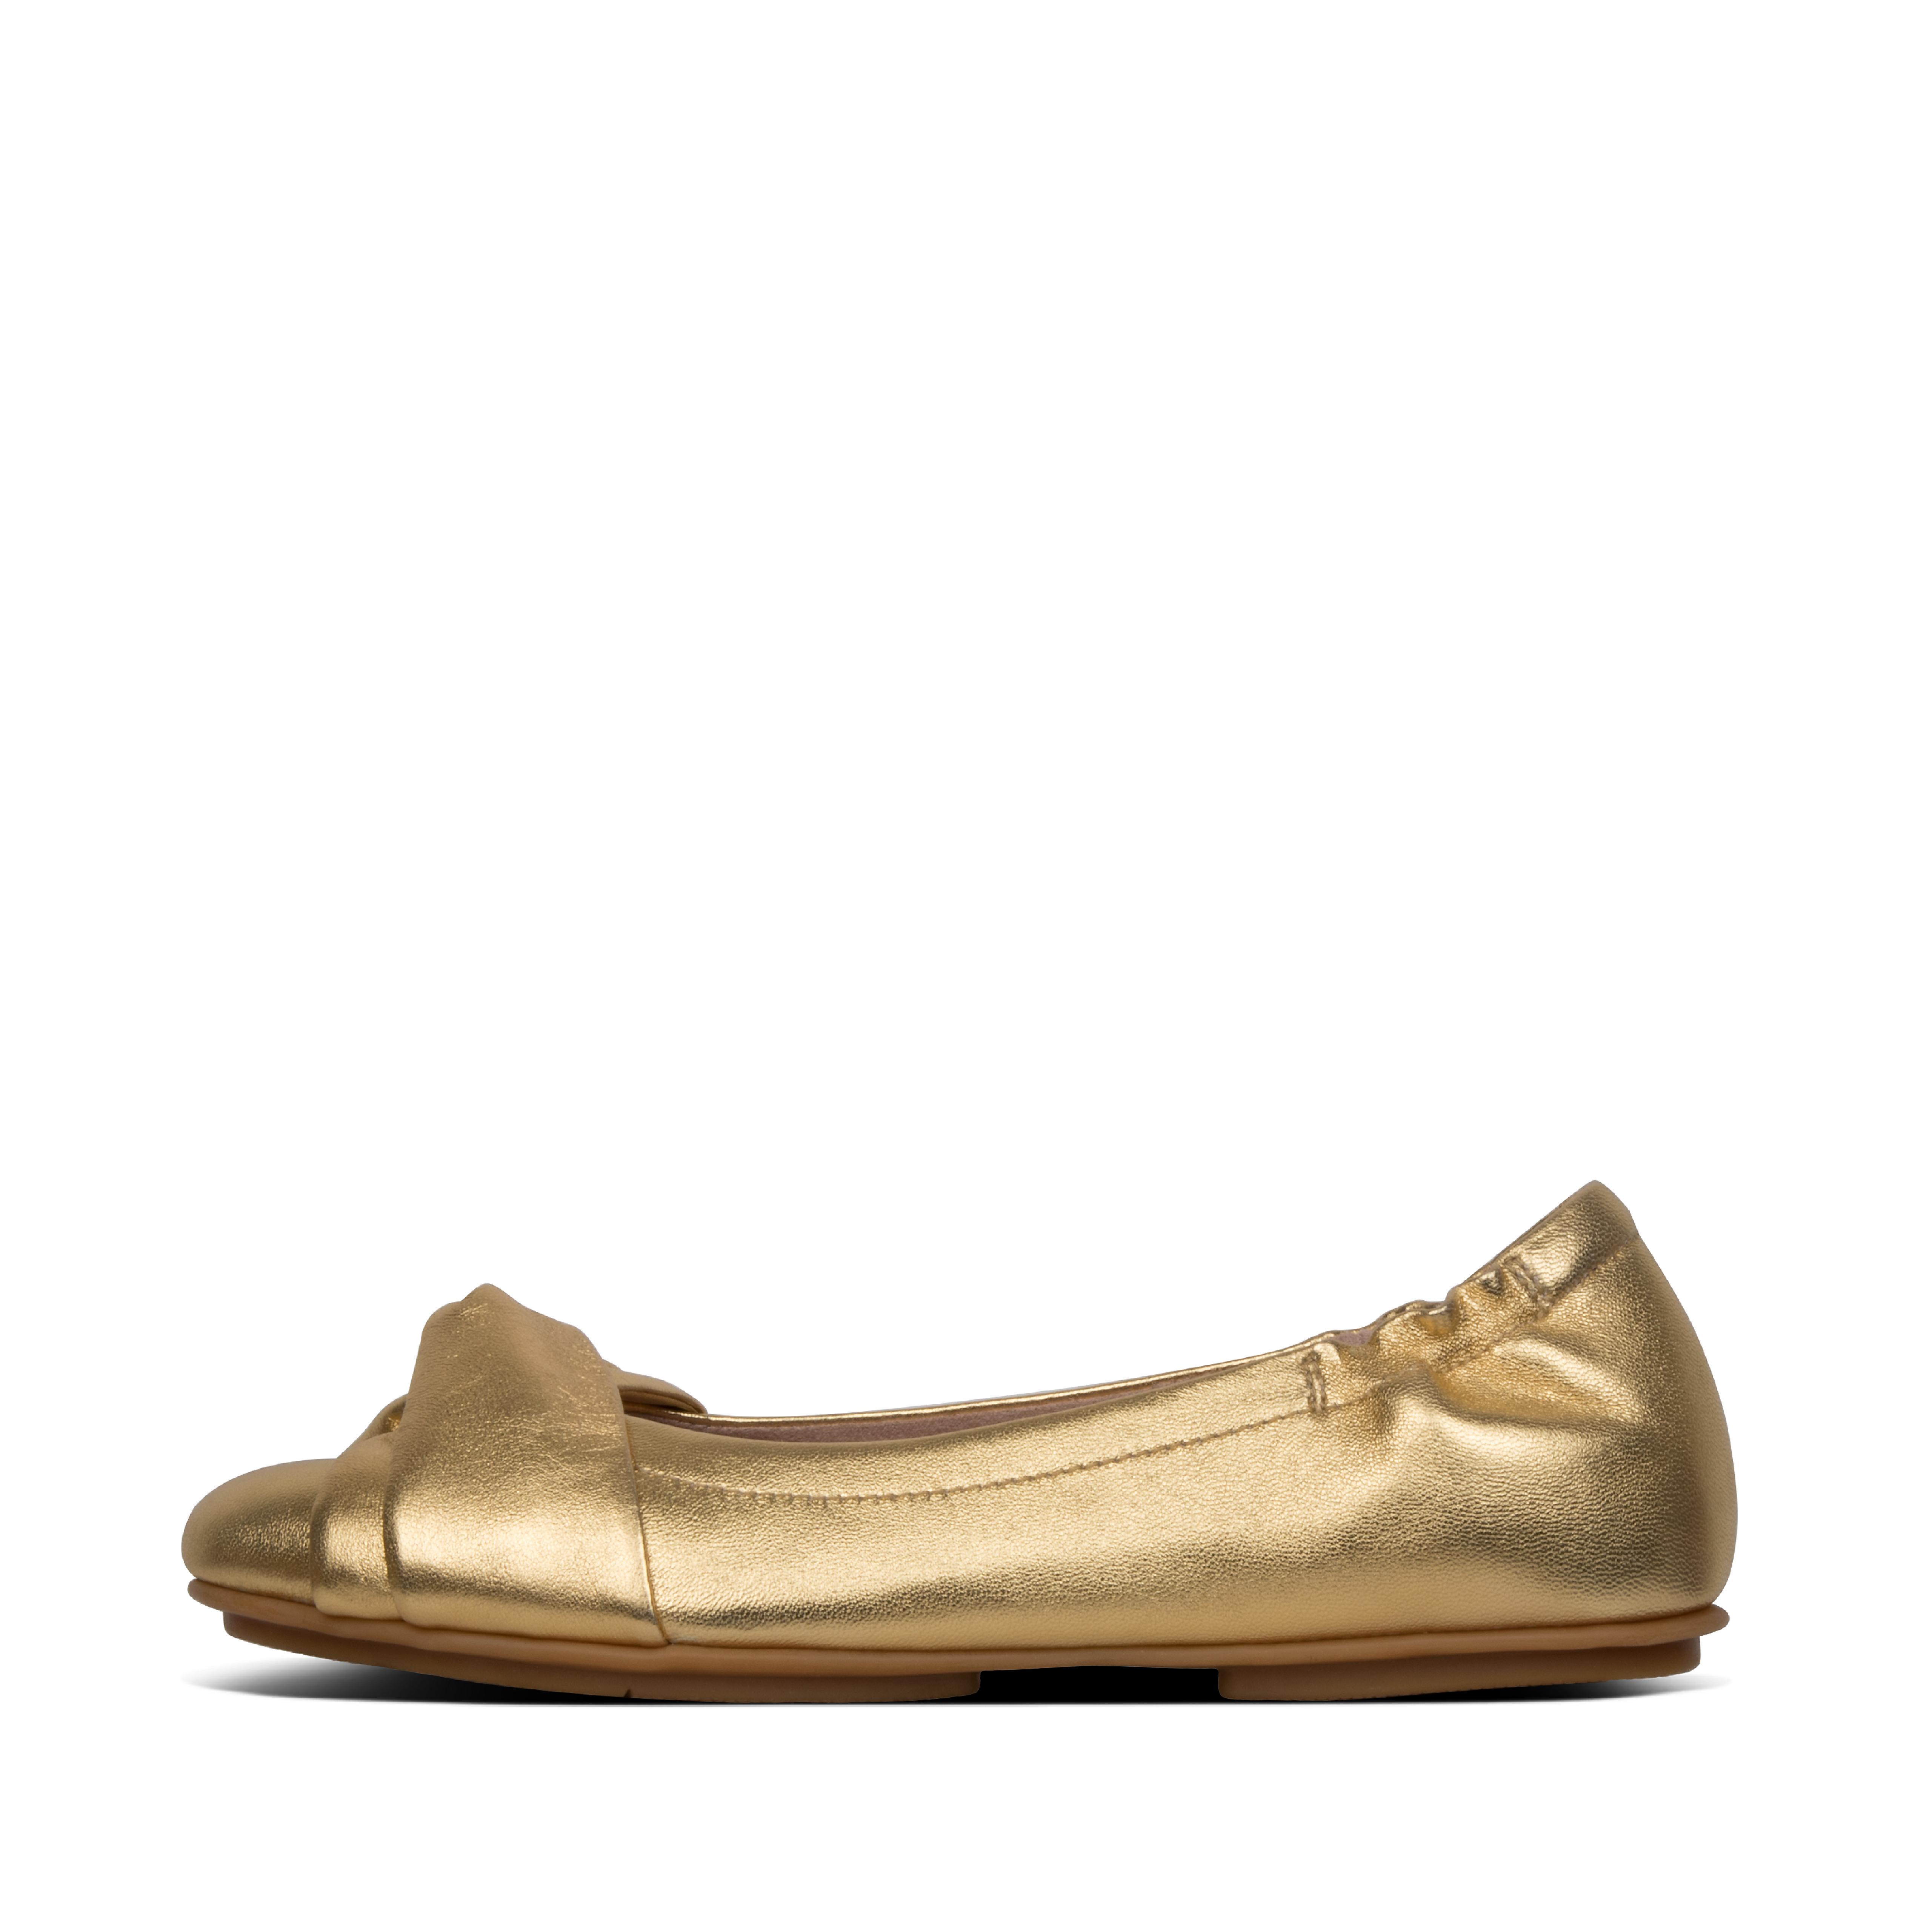 gold ballet pumps leather